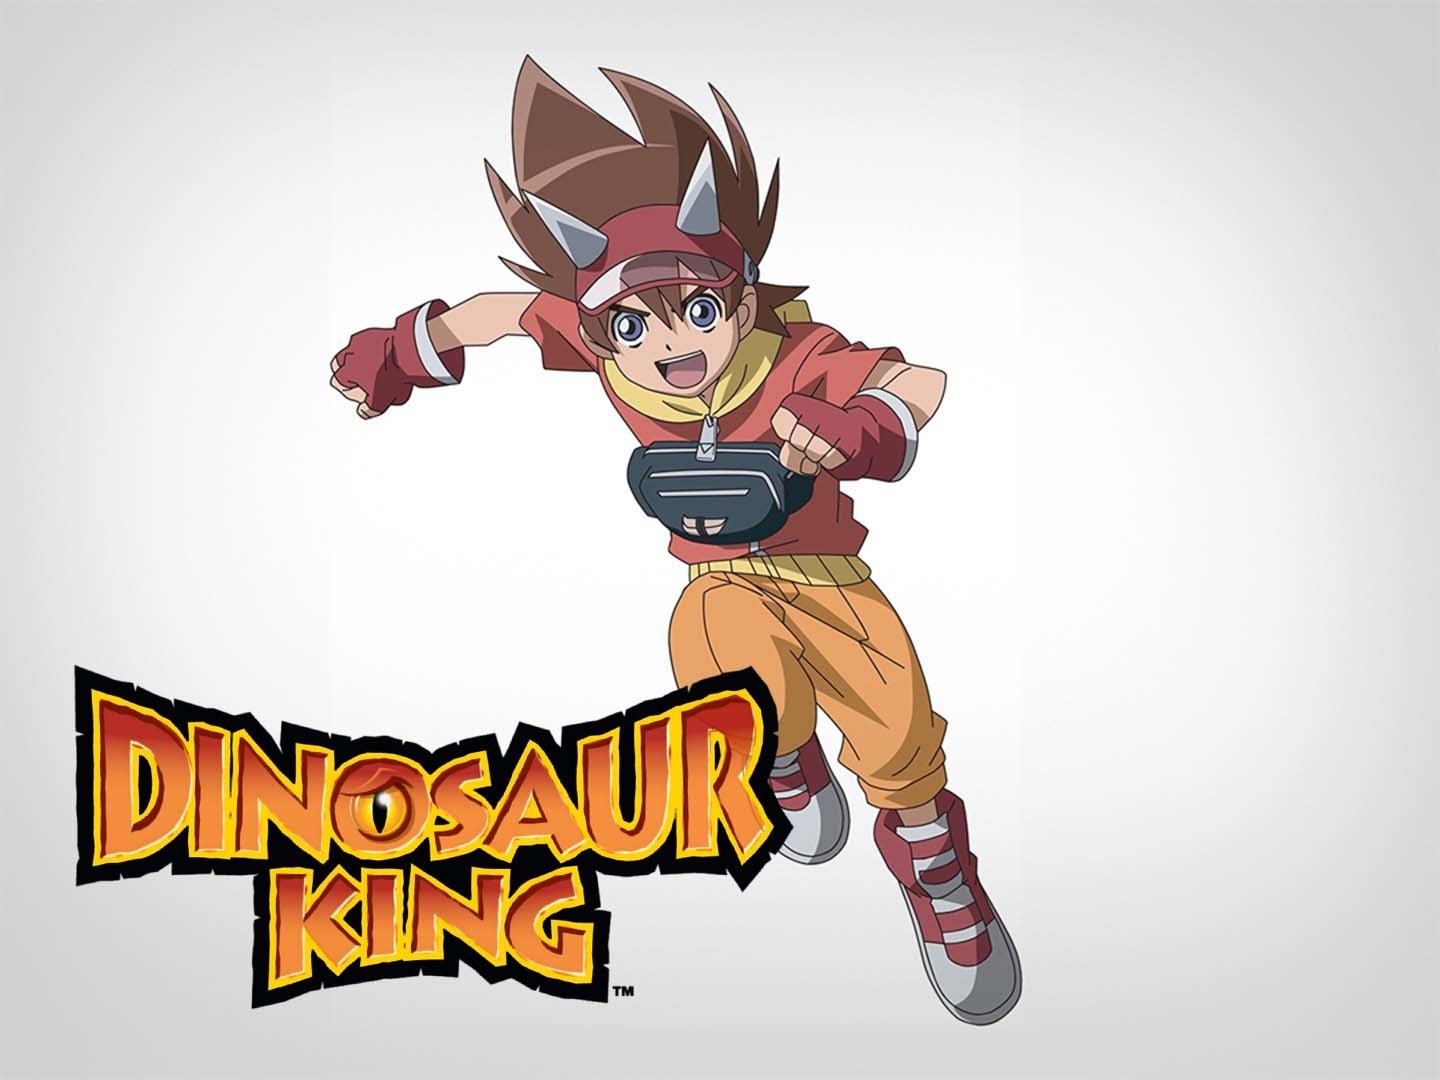 Dinosaur king anime